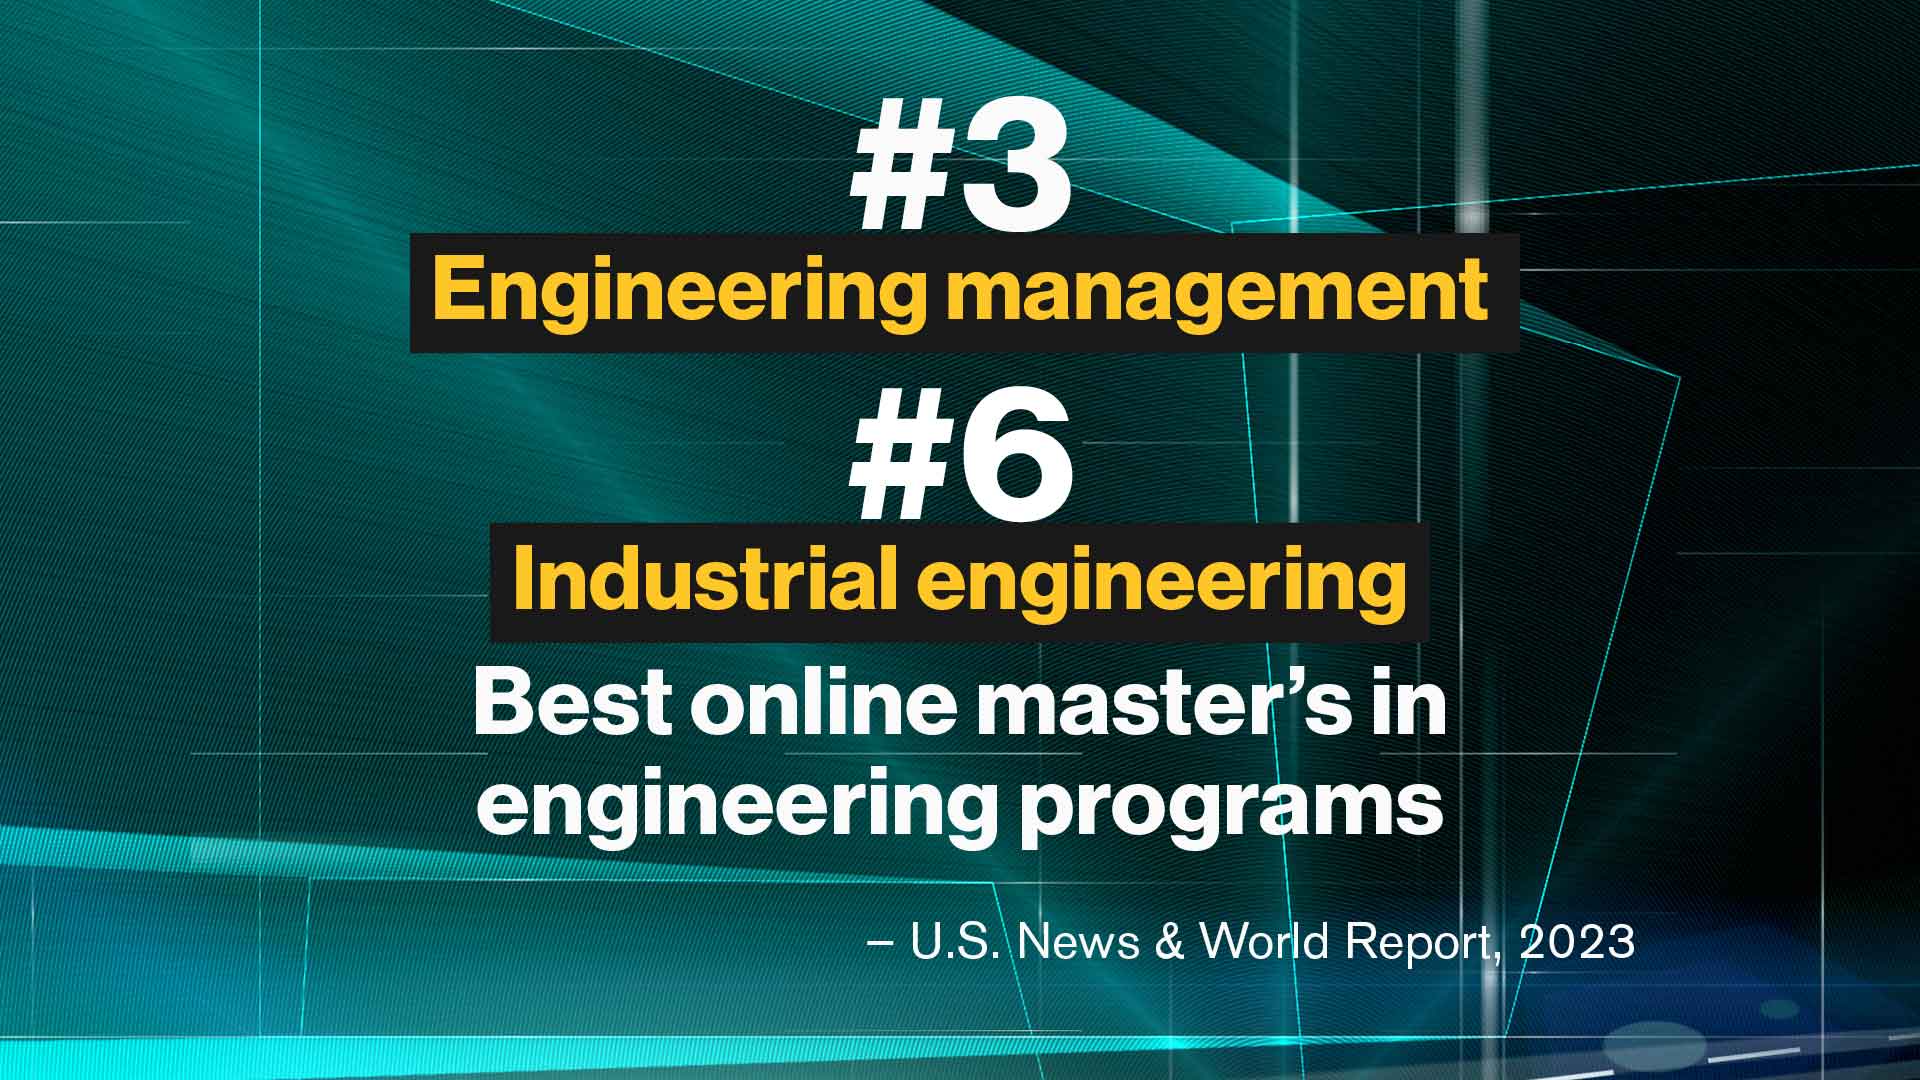 #3 engineering management and #6 industrial engineering best online master's in engineering programs